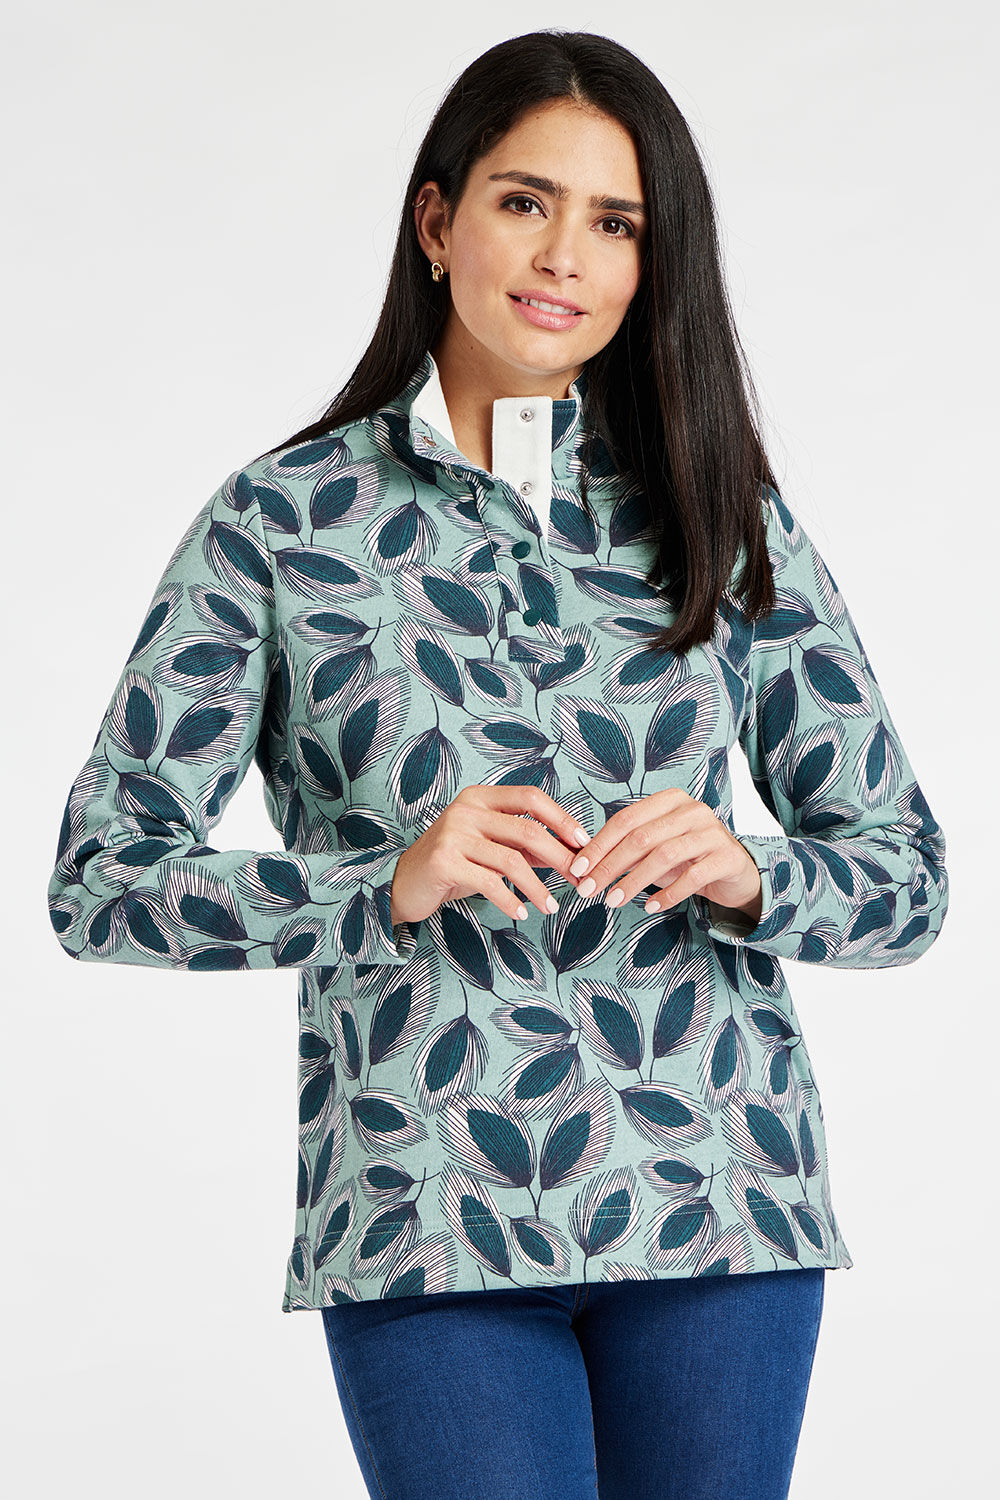 Bonmarche Women’s Green and White Cotton Leaf Print Long Sleeve Funnel Neck Sweatshirt, Size: 10